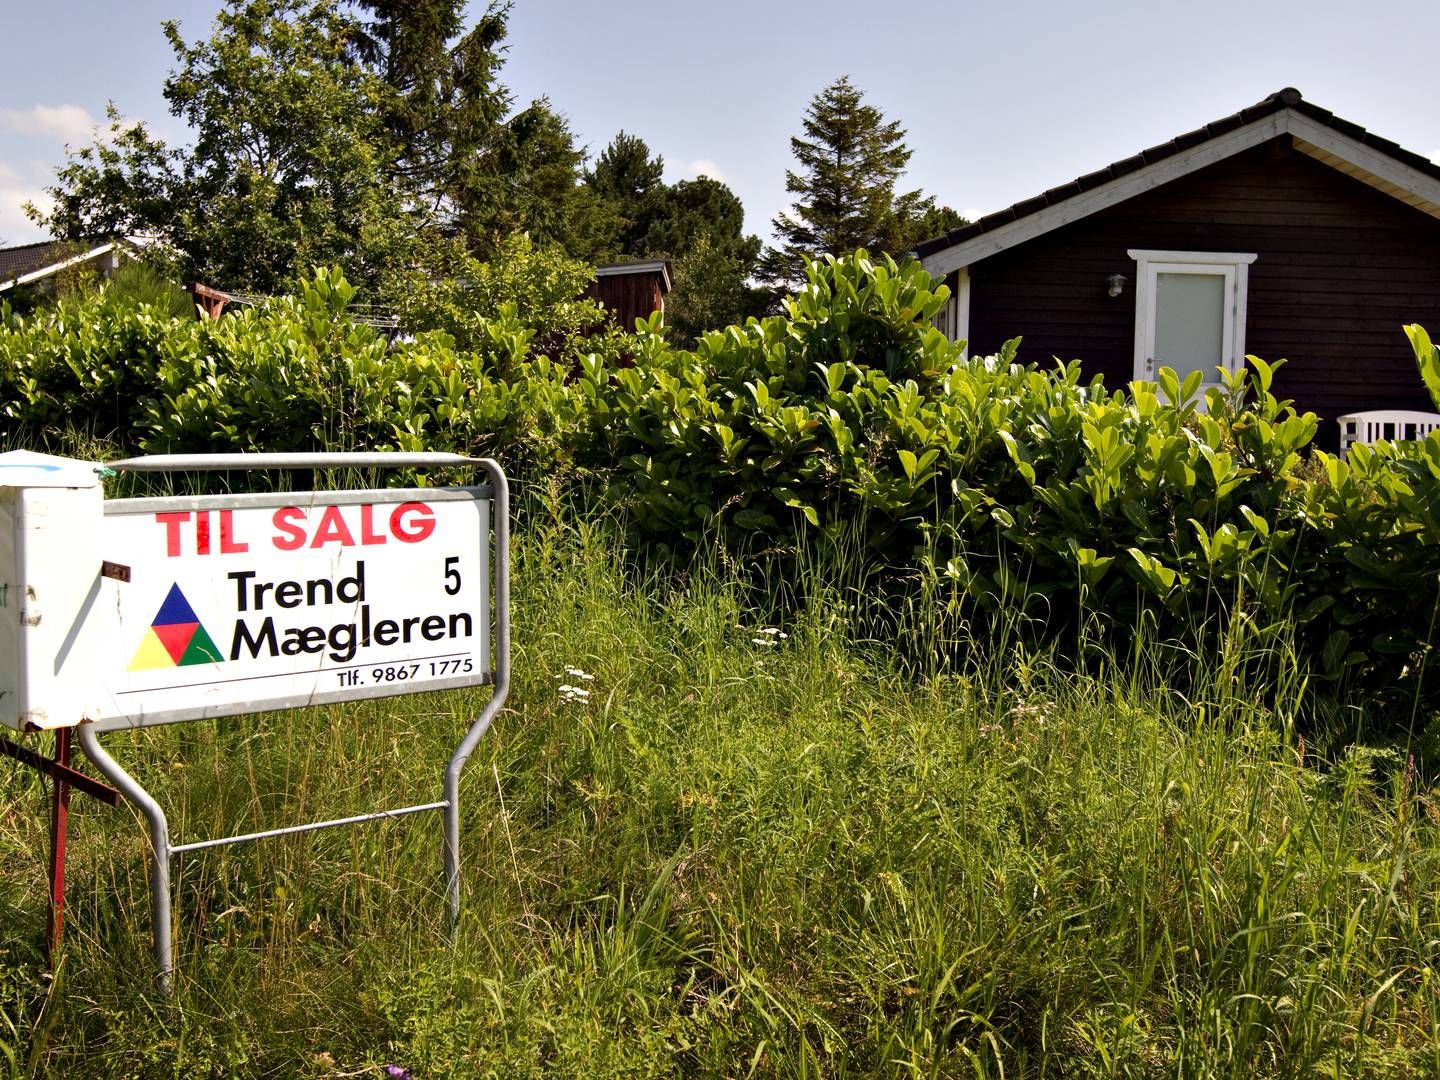 Coronanedlukning i Nordjylland kan betyde færre boligrelaterede opgaver, siger lokale advokater. | Foto: Søren Schnoor